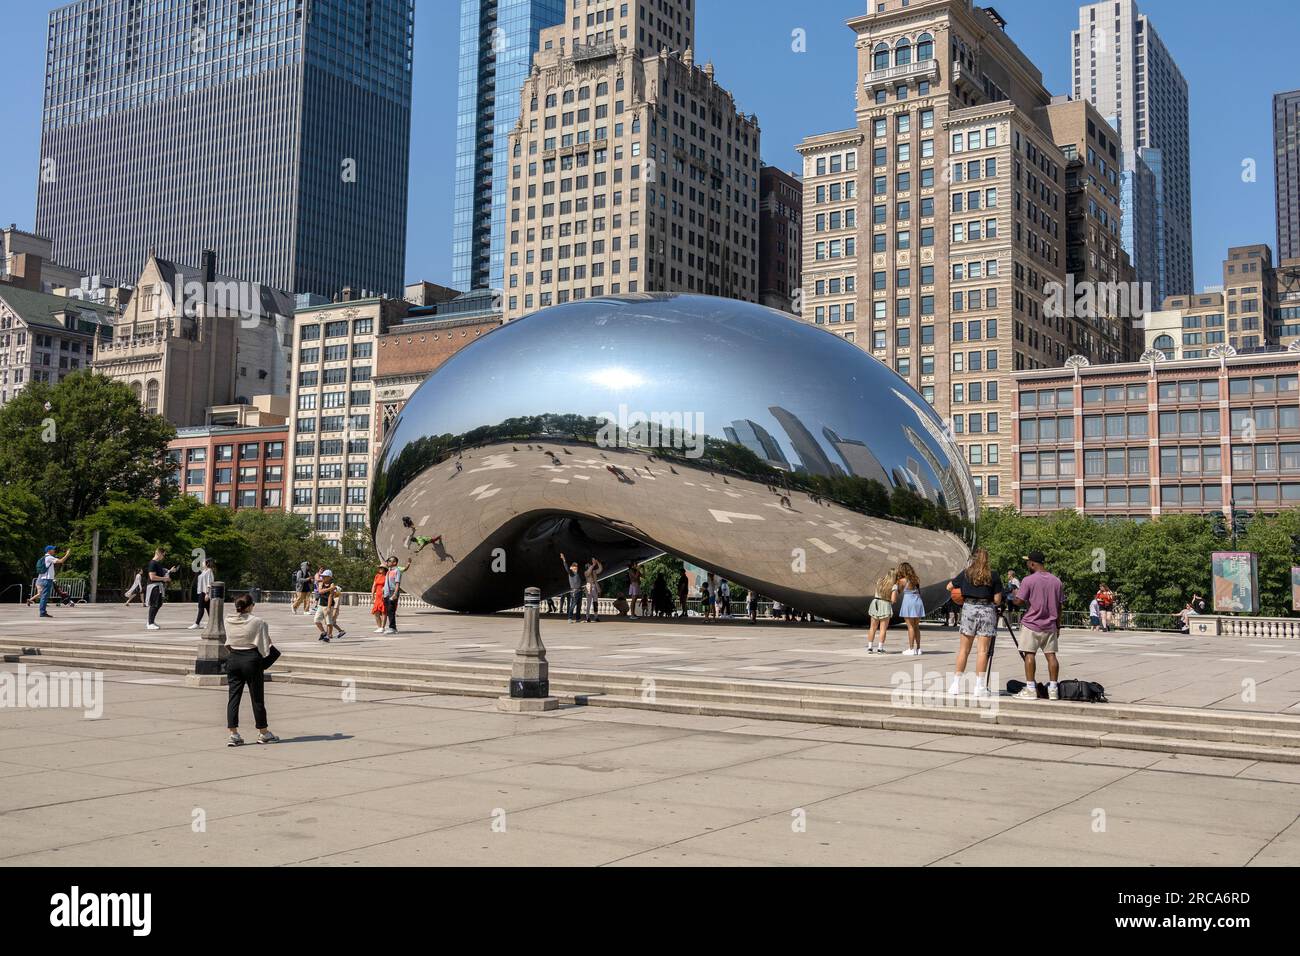 Cloud Gate Sculpture (Chicago Bean), In Millennium Park Chicago USA, Tourists Taking Photos Stock Photo